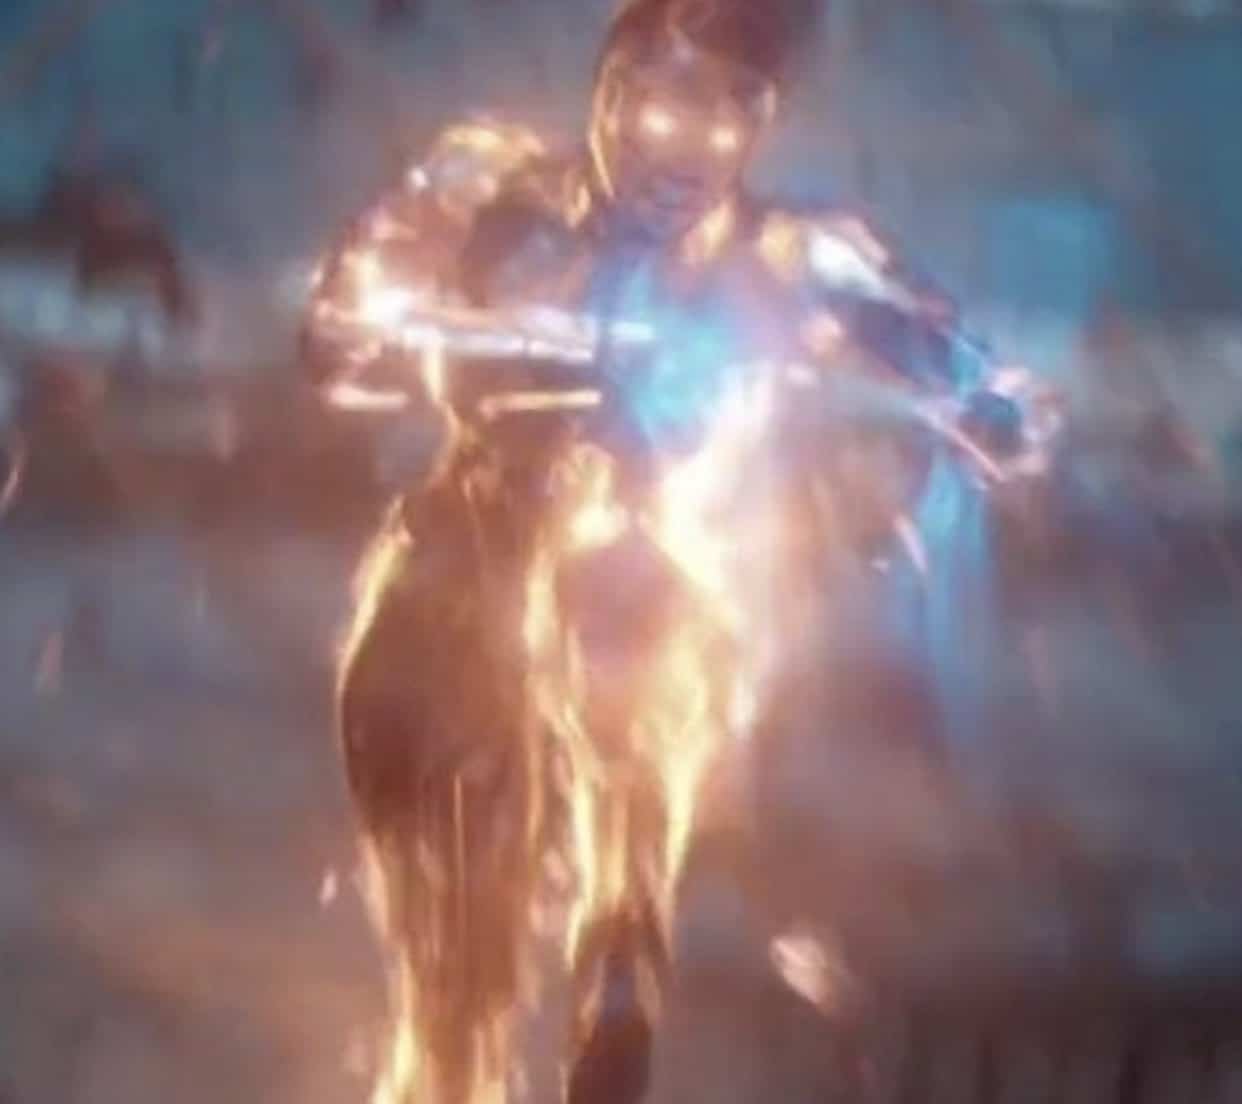 Superior Iron man multiverse